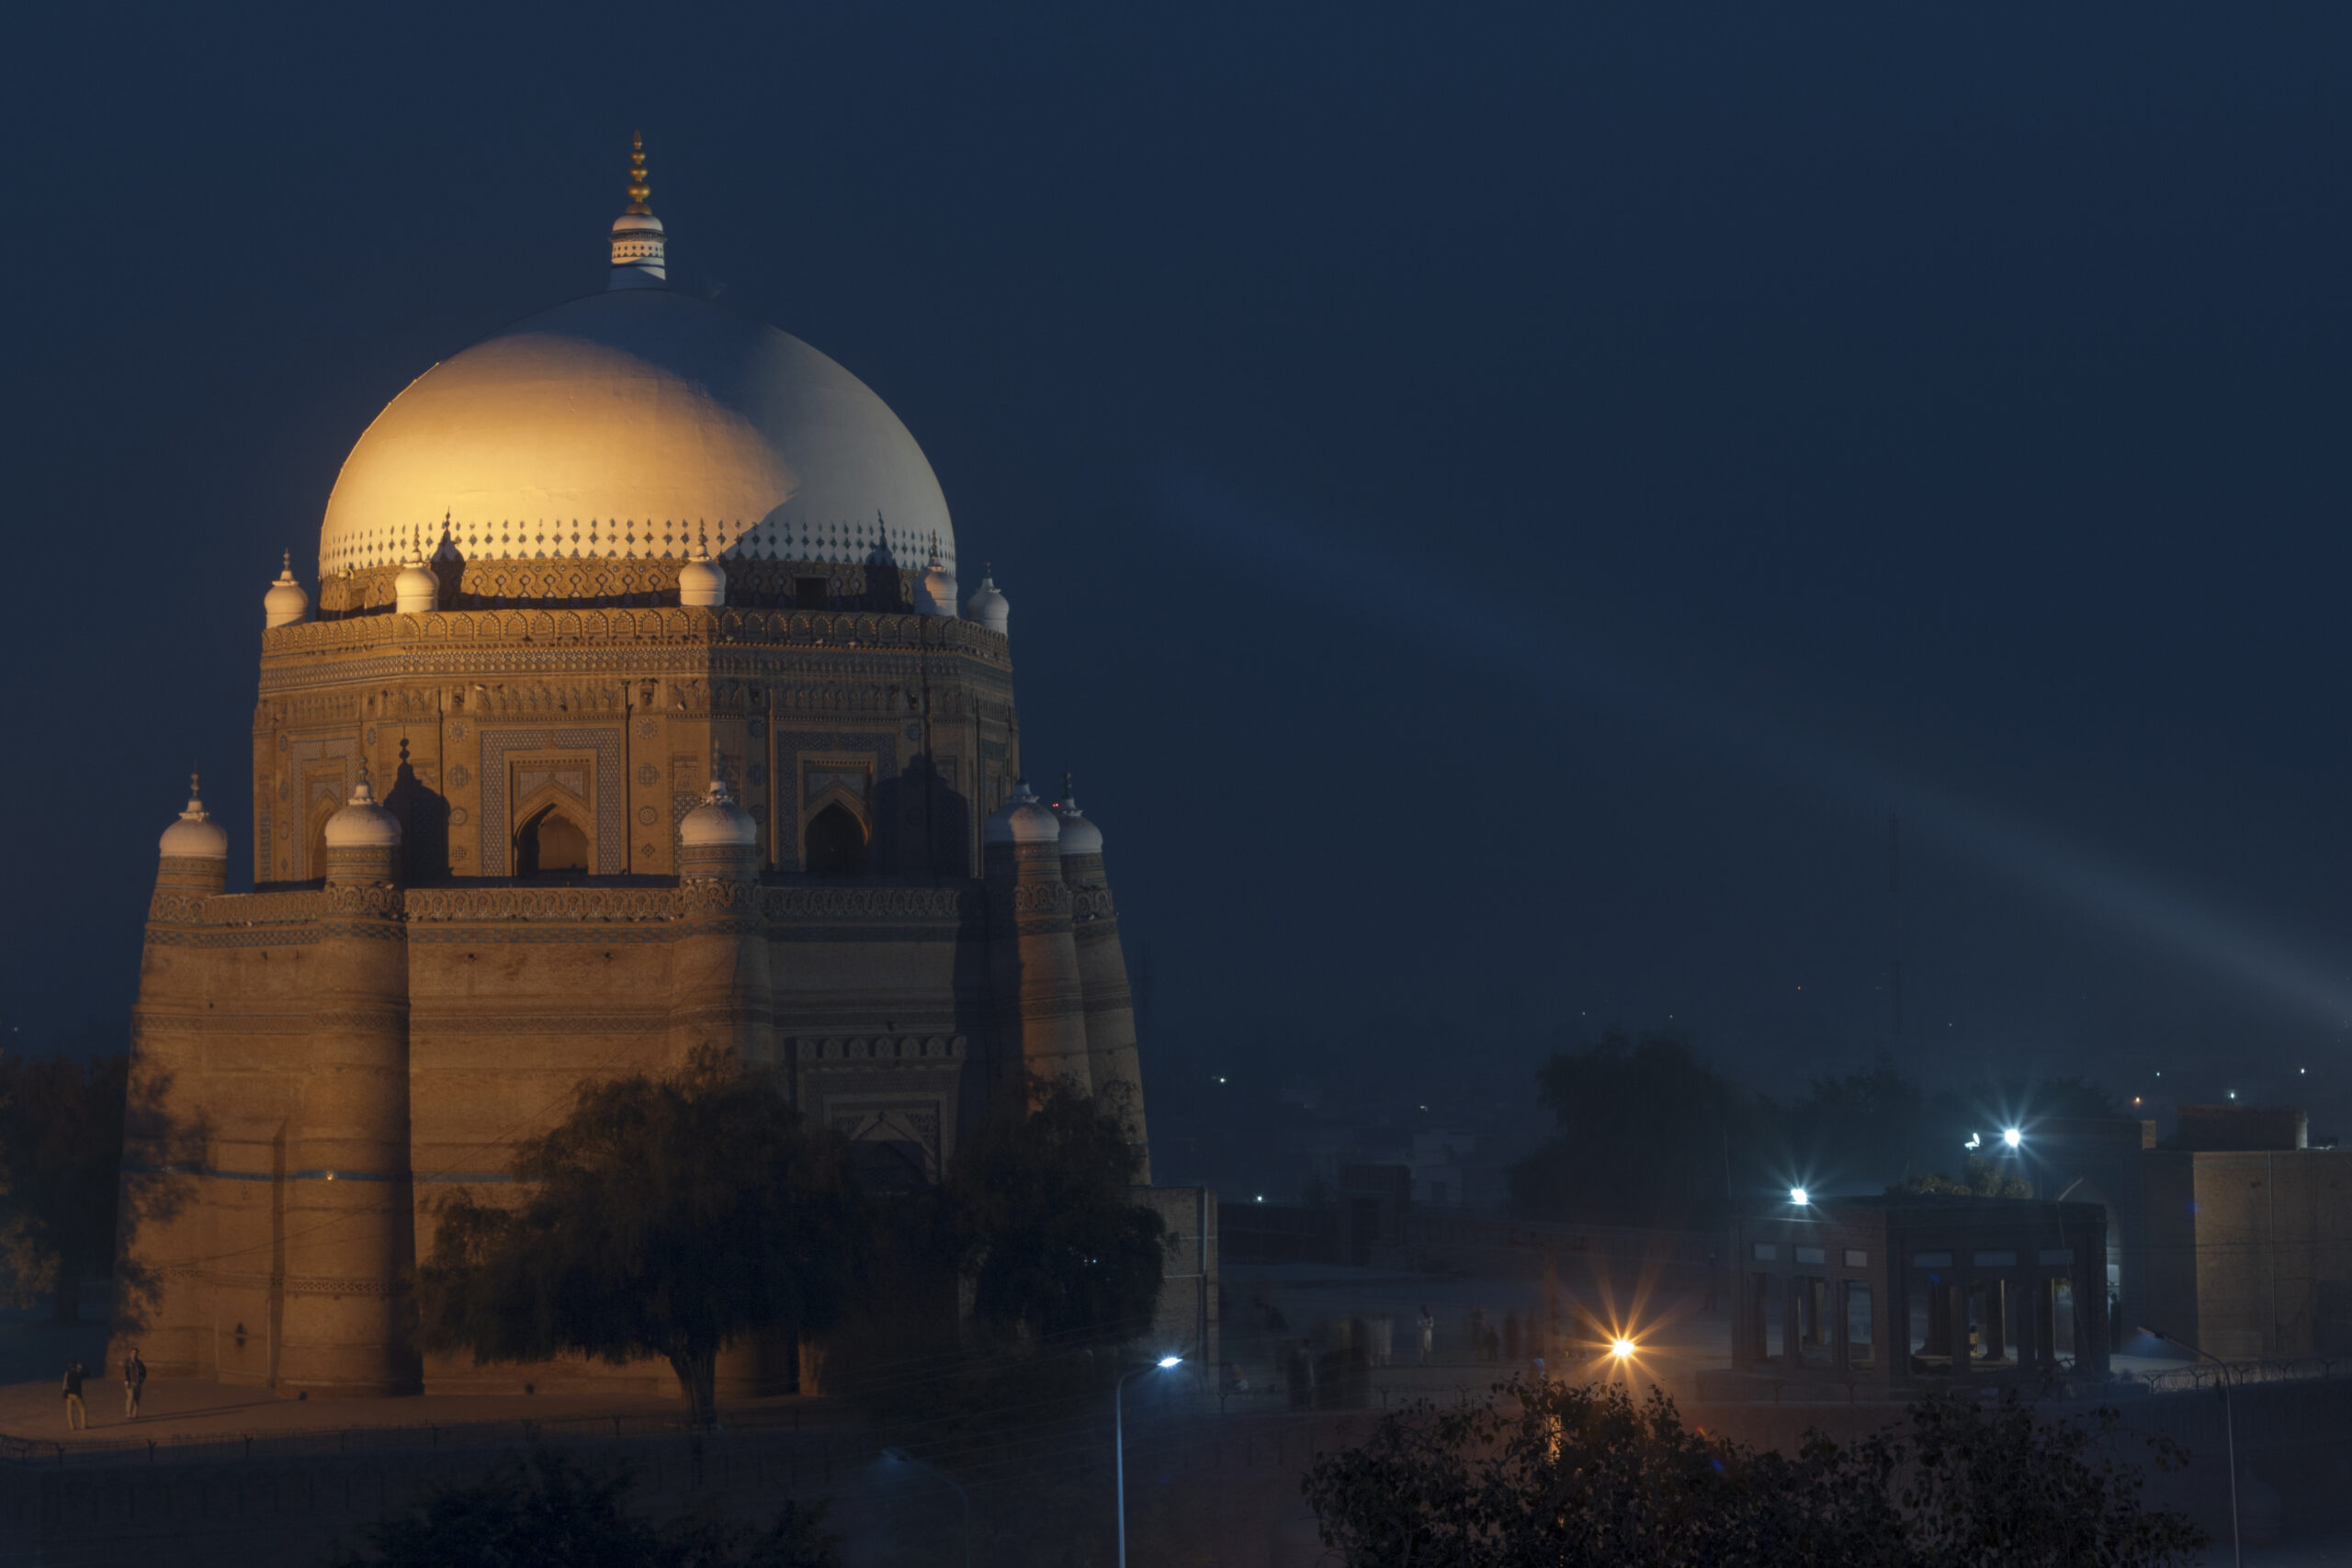 Shah Rukn Alam Mazar in the heart of Multan.